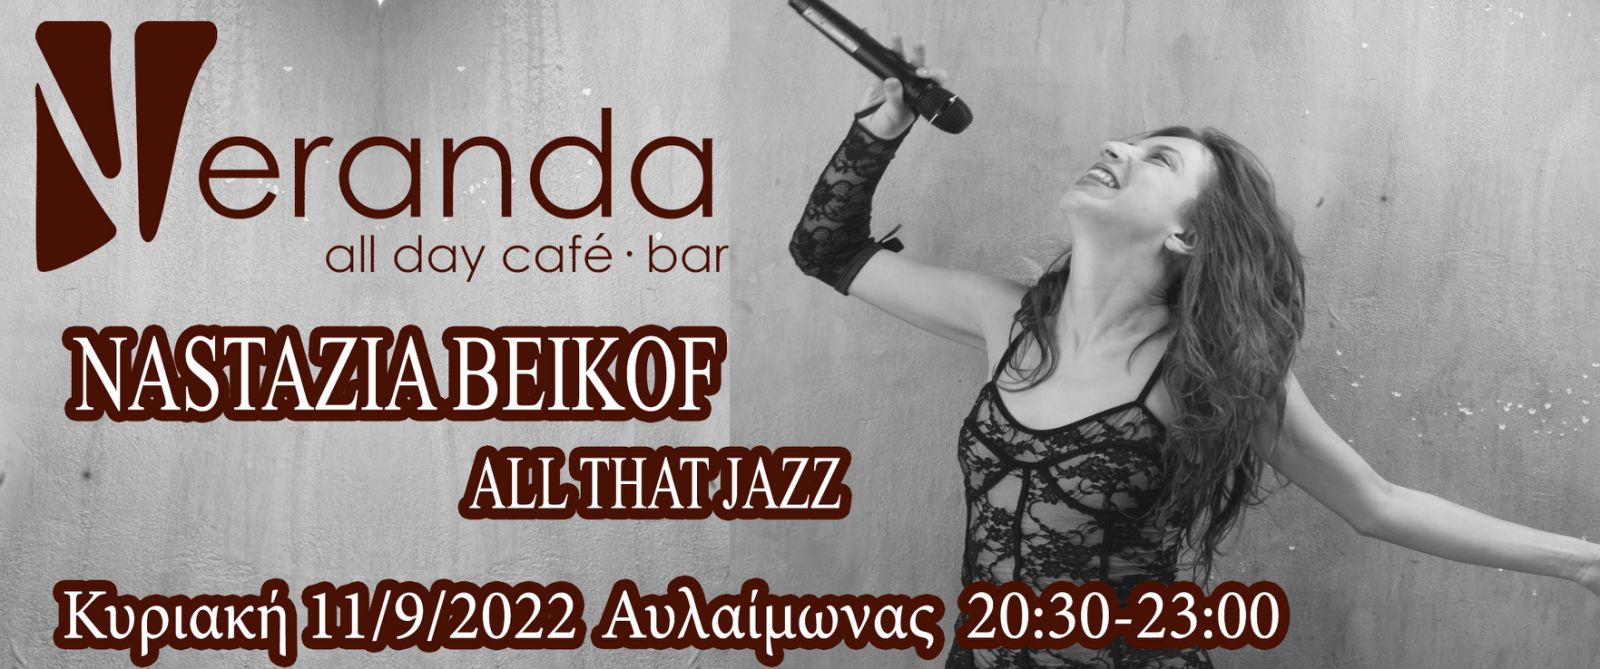 nastazia-beikof-all-that-jazz-veranda